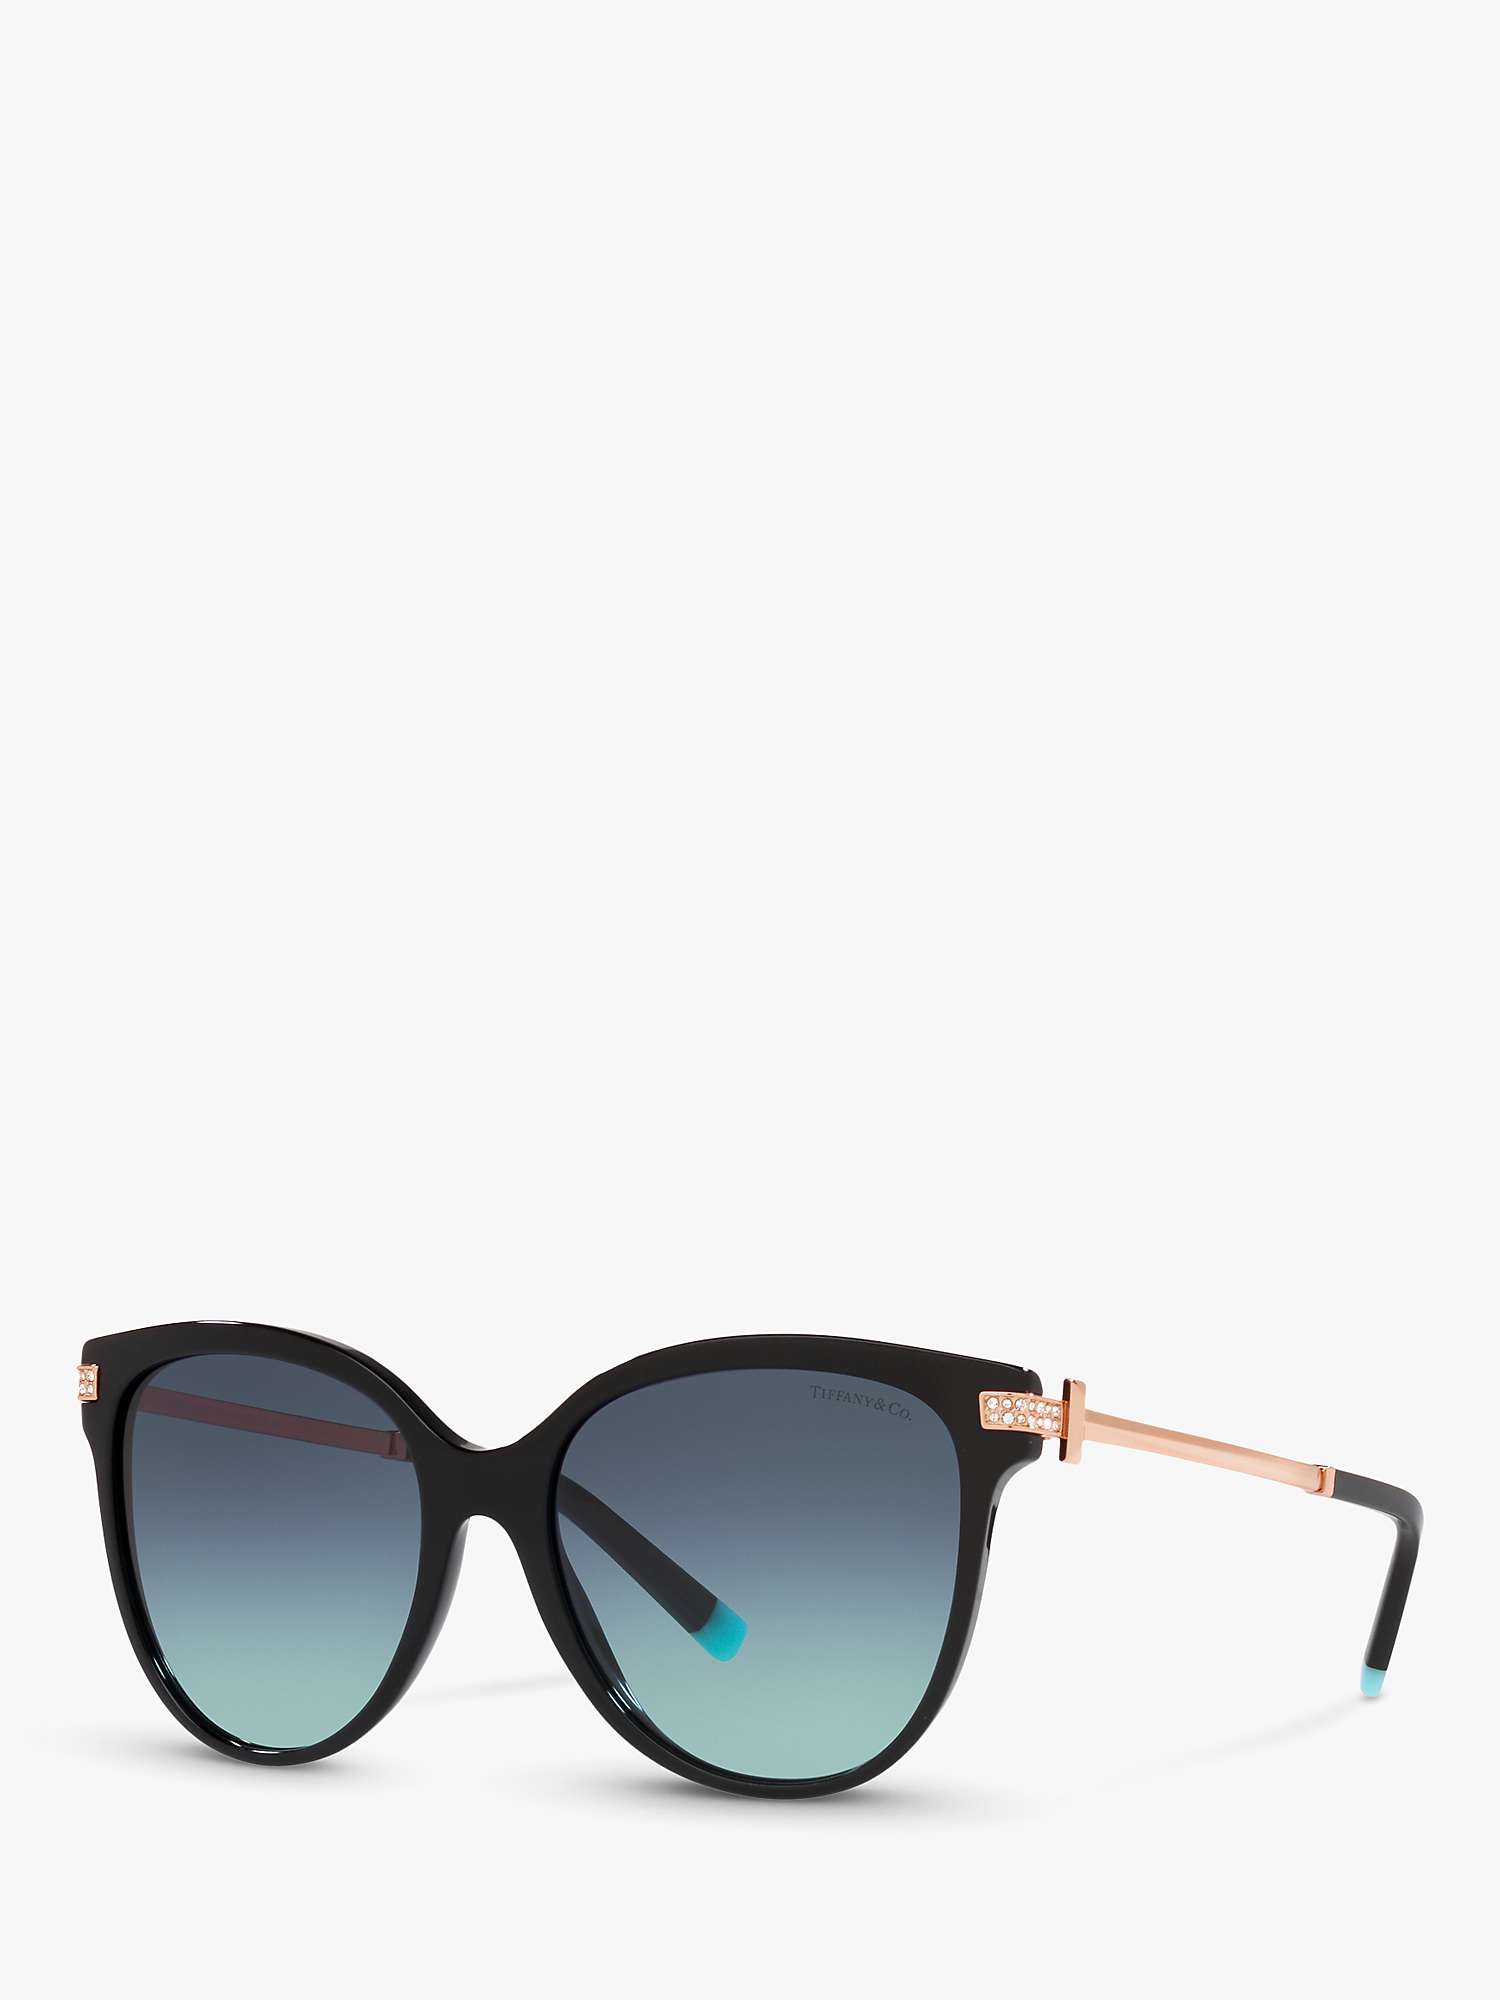 Buy Tiffany & Co TF4193B Women's Oval Sunglasses, Black/Blue Gradient Online at johnlewis.com